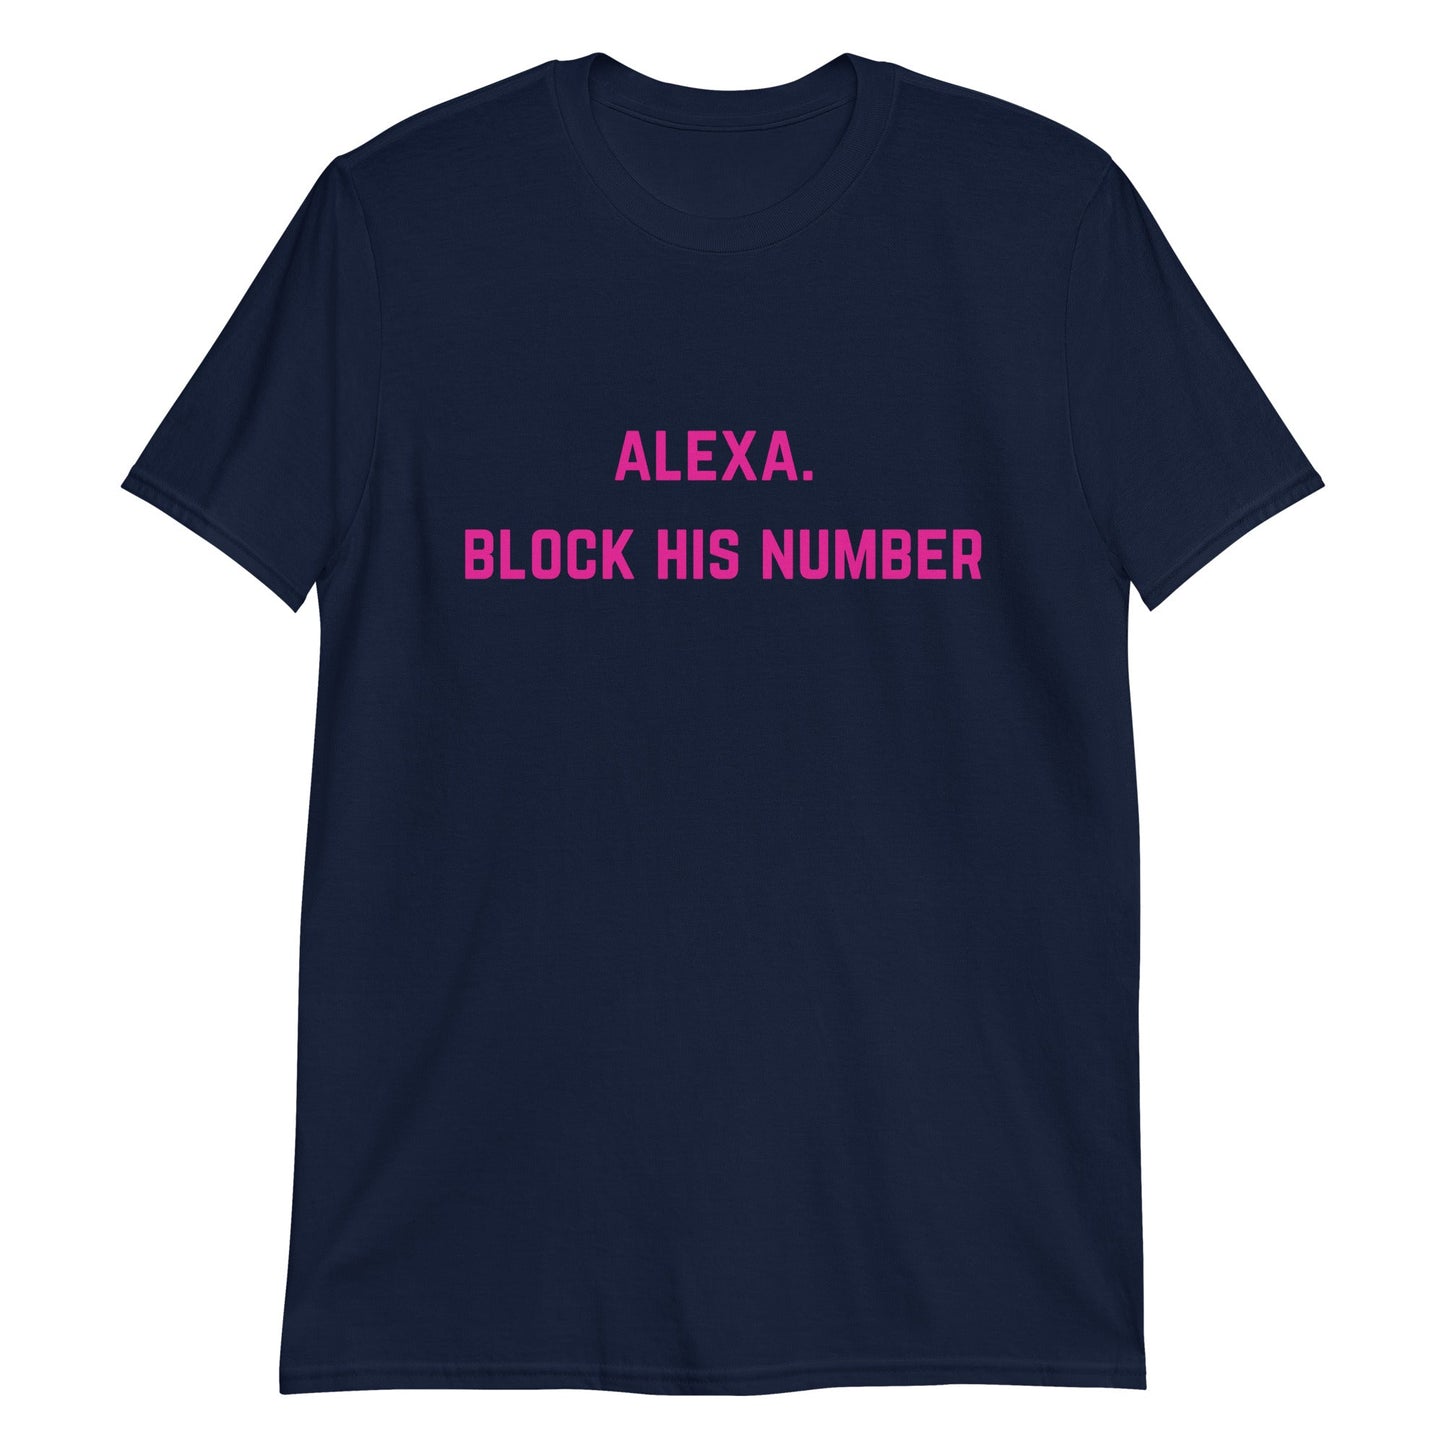 Alexa. Block His Number. Short-Sleeve Unisex T-Shirt - Catch This Tea Shirts